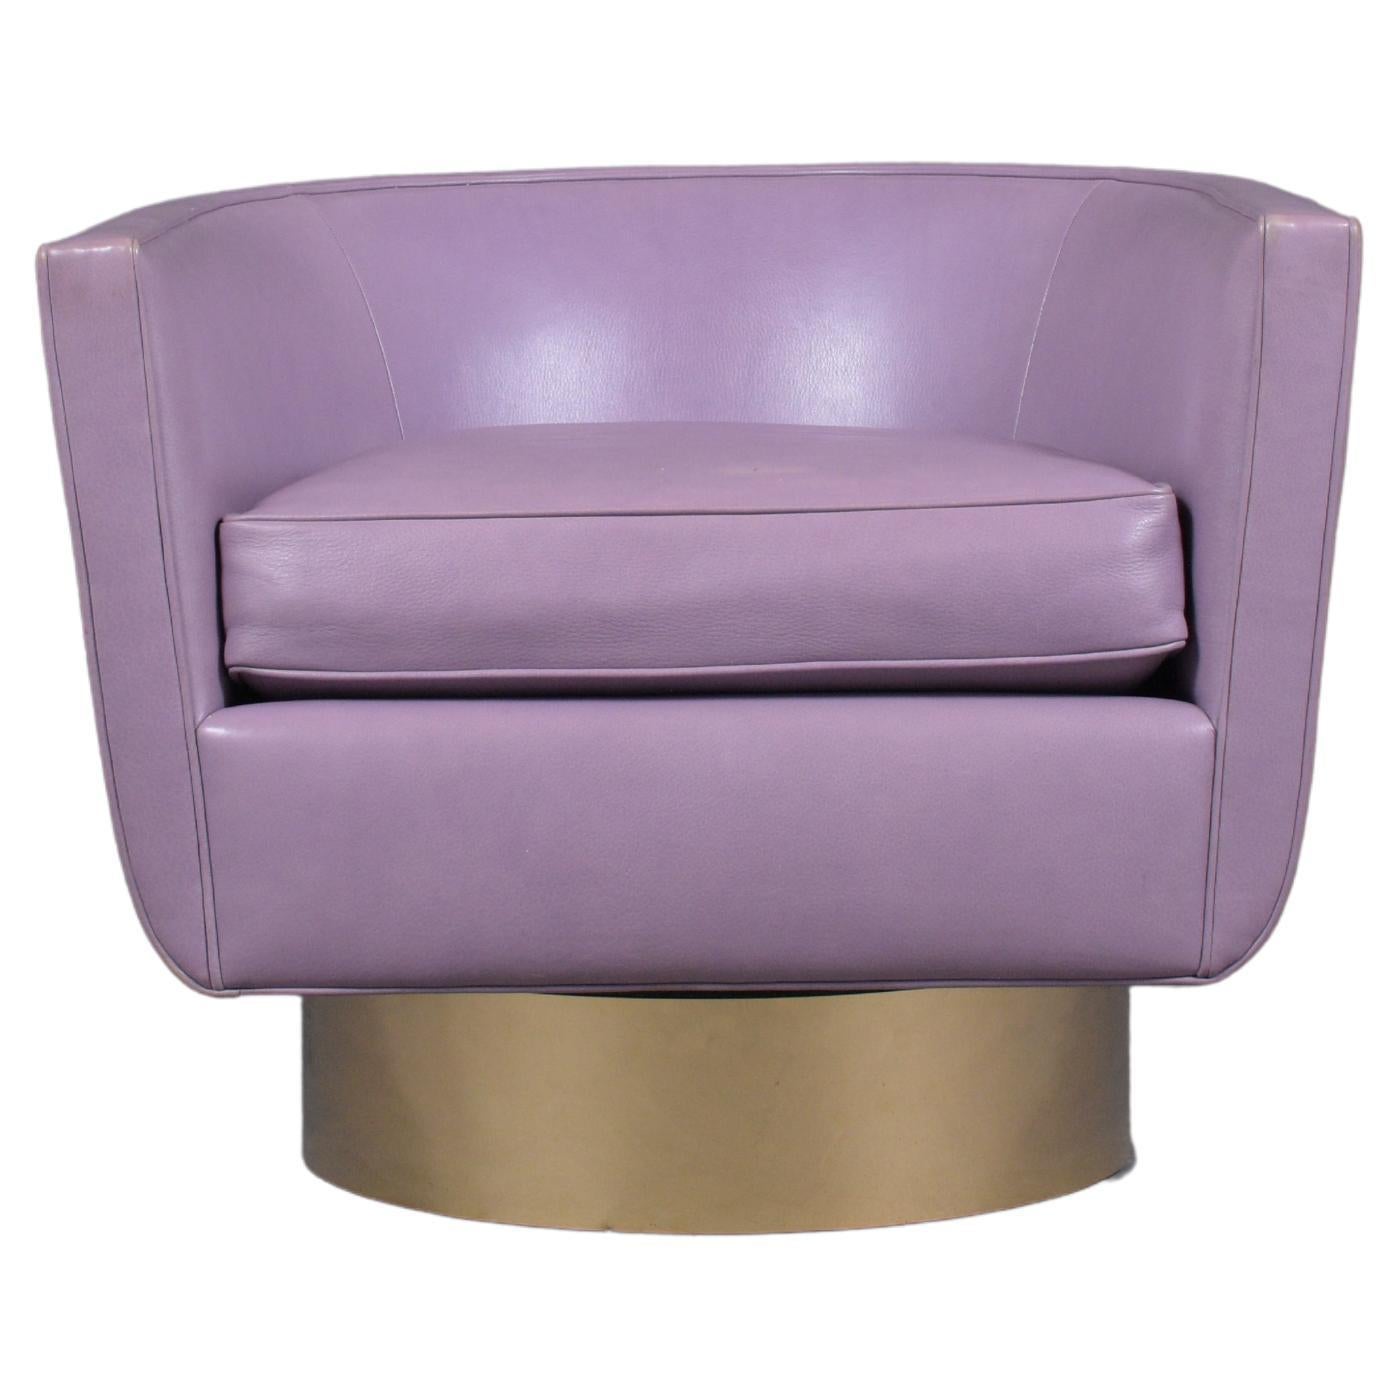 Restaurierter Messing-Drehstuhl aus der Mitte des Jahrhunderts in violettem Leder - Modern Elegance